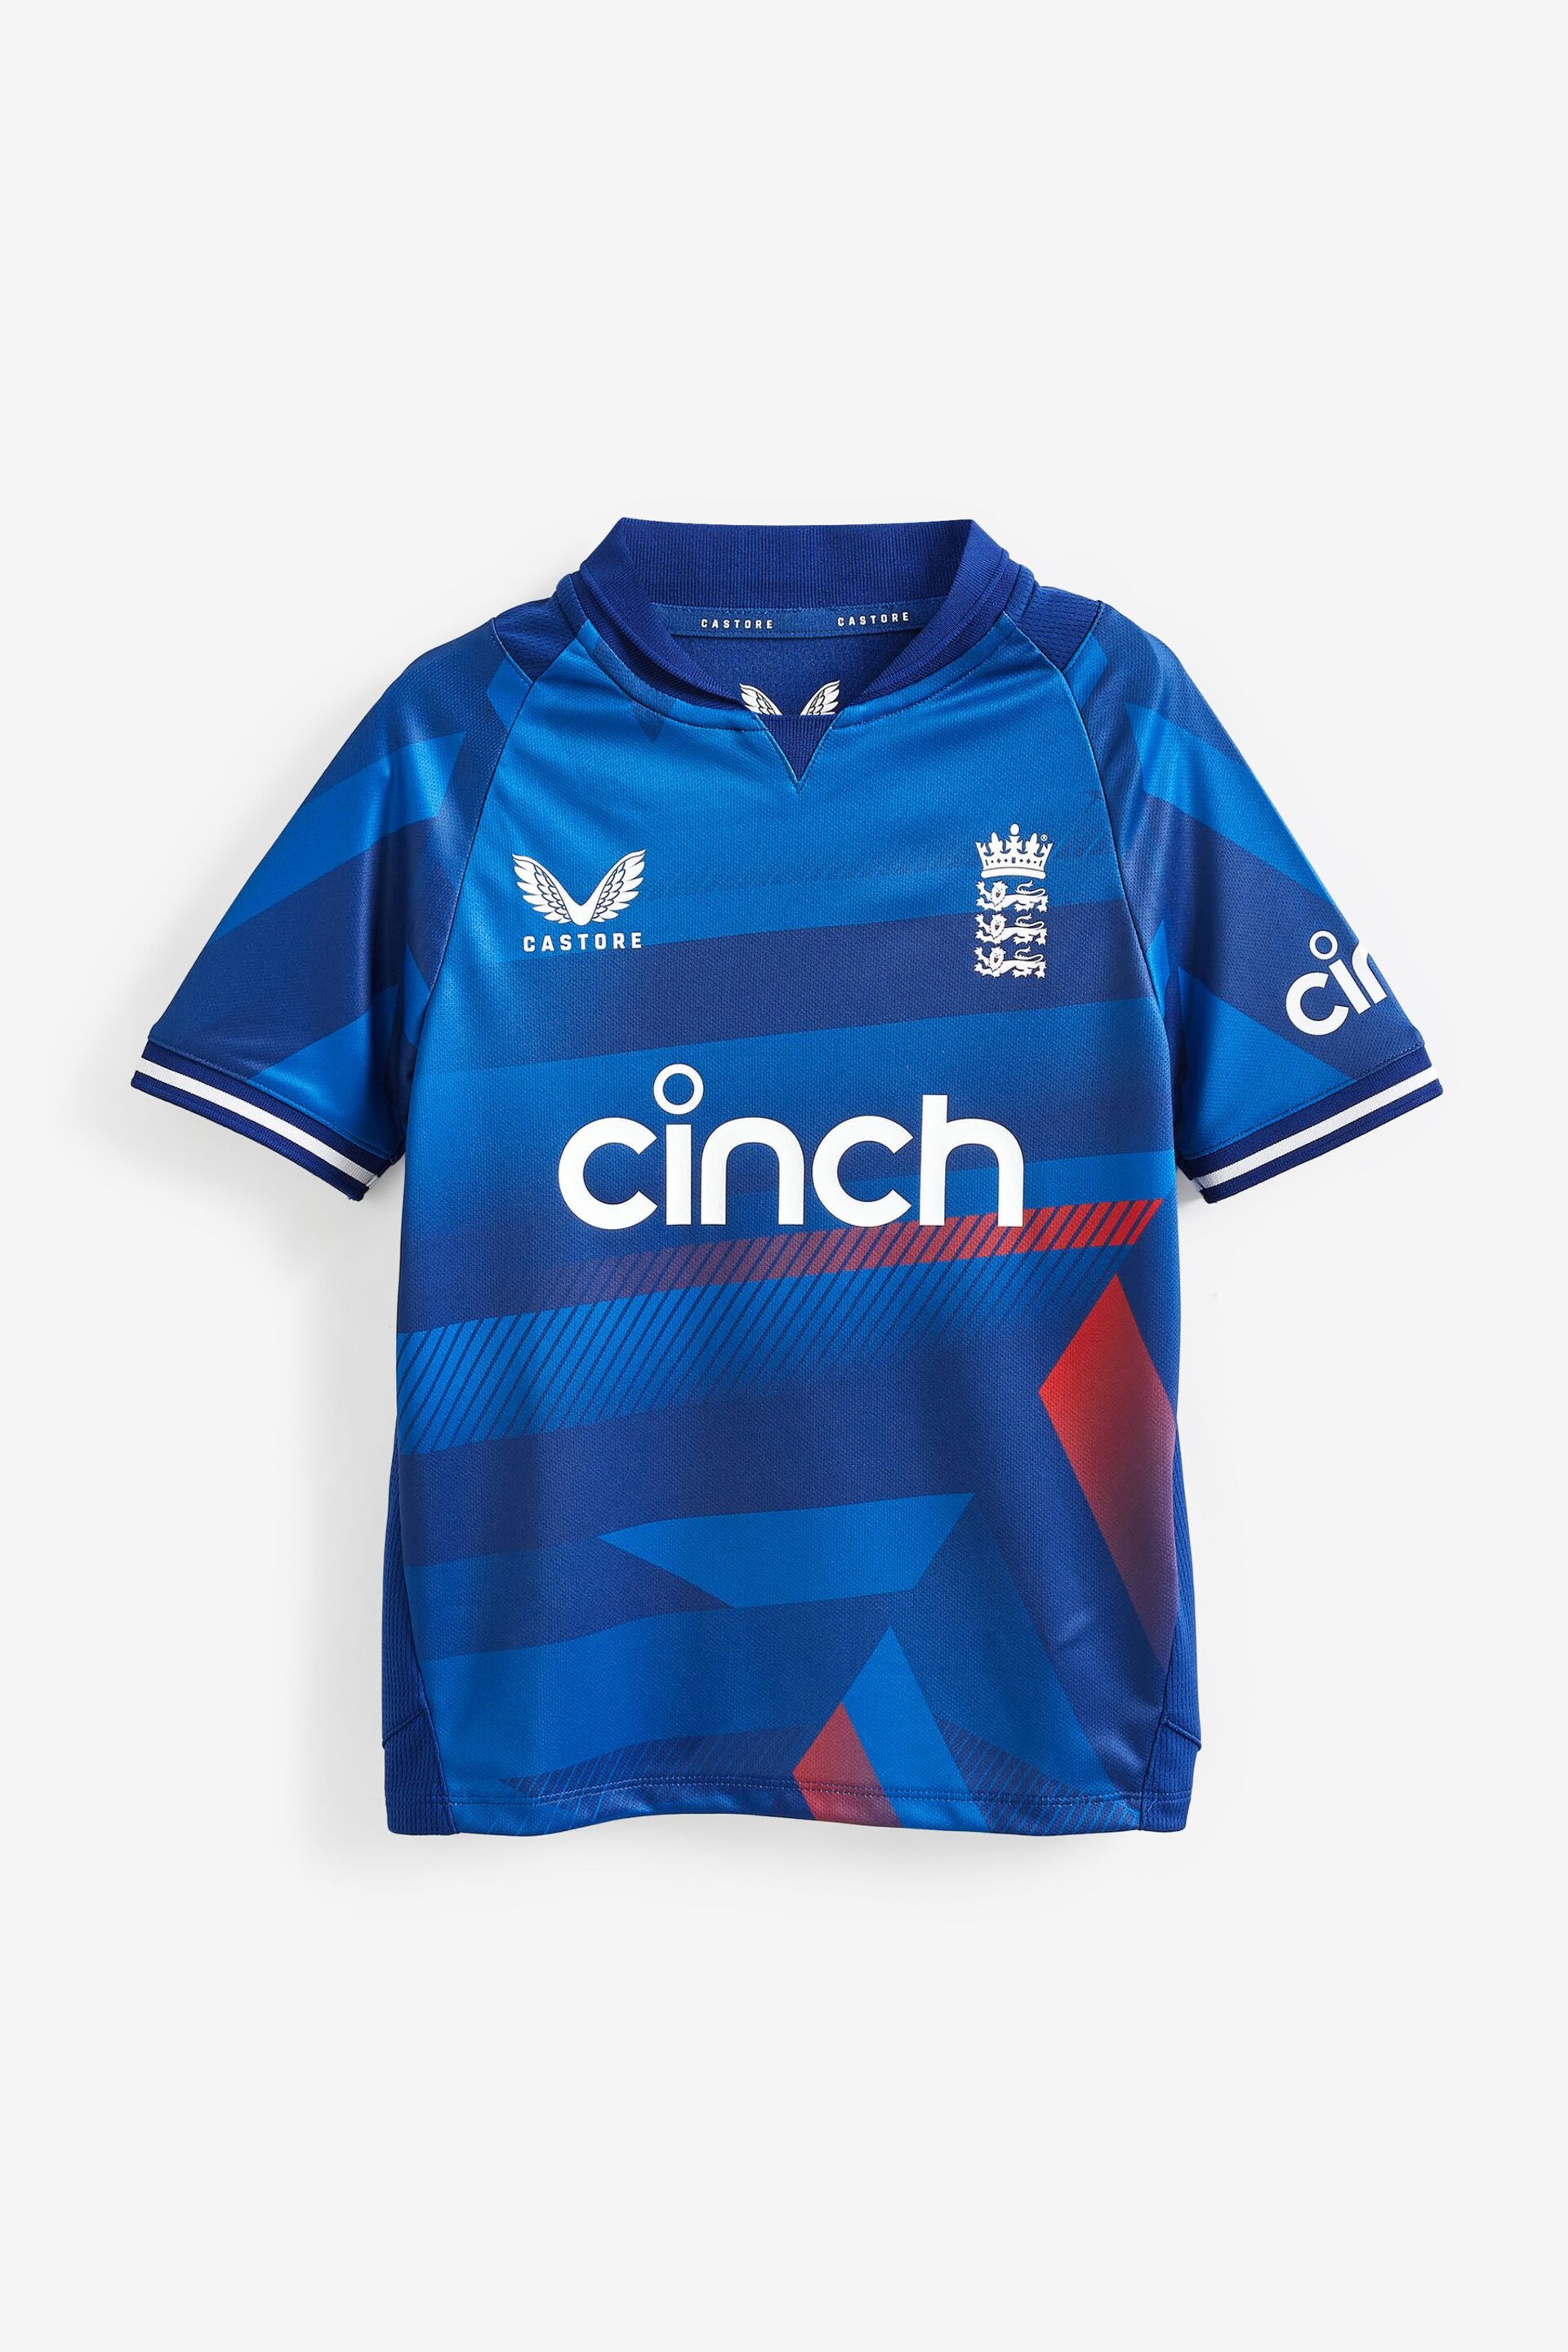 Castore Blue England World Cup Kids Cricket Shirt - Image 1 of 5